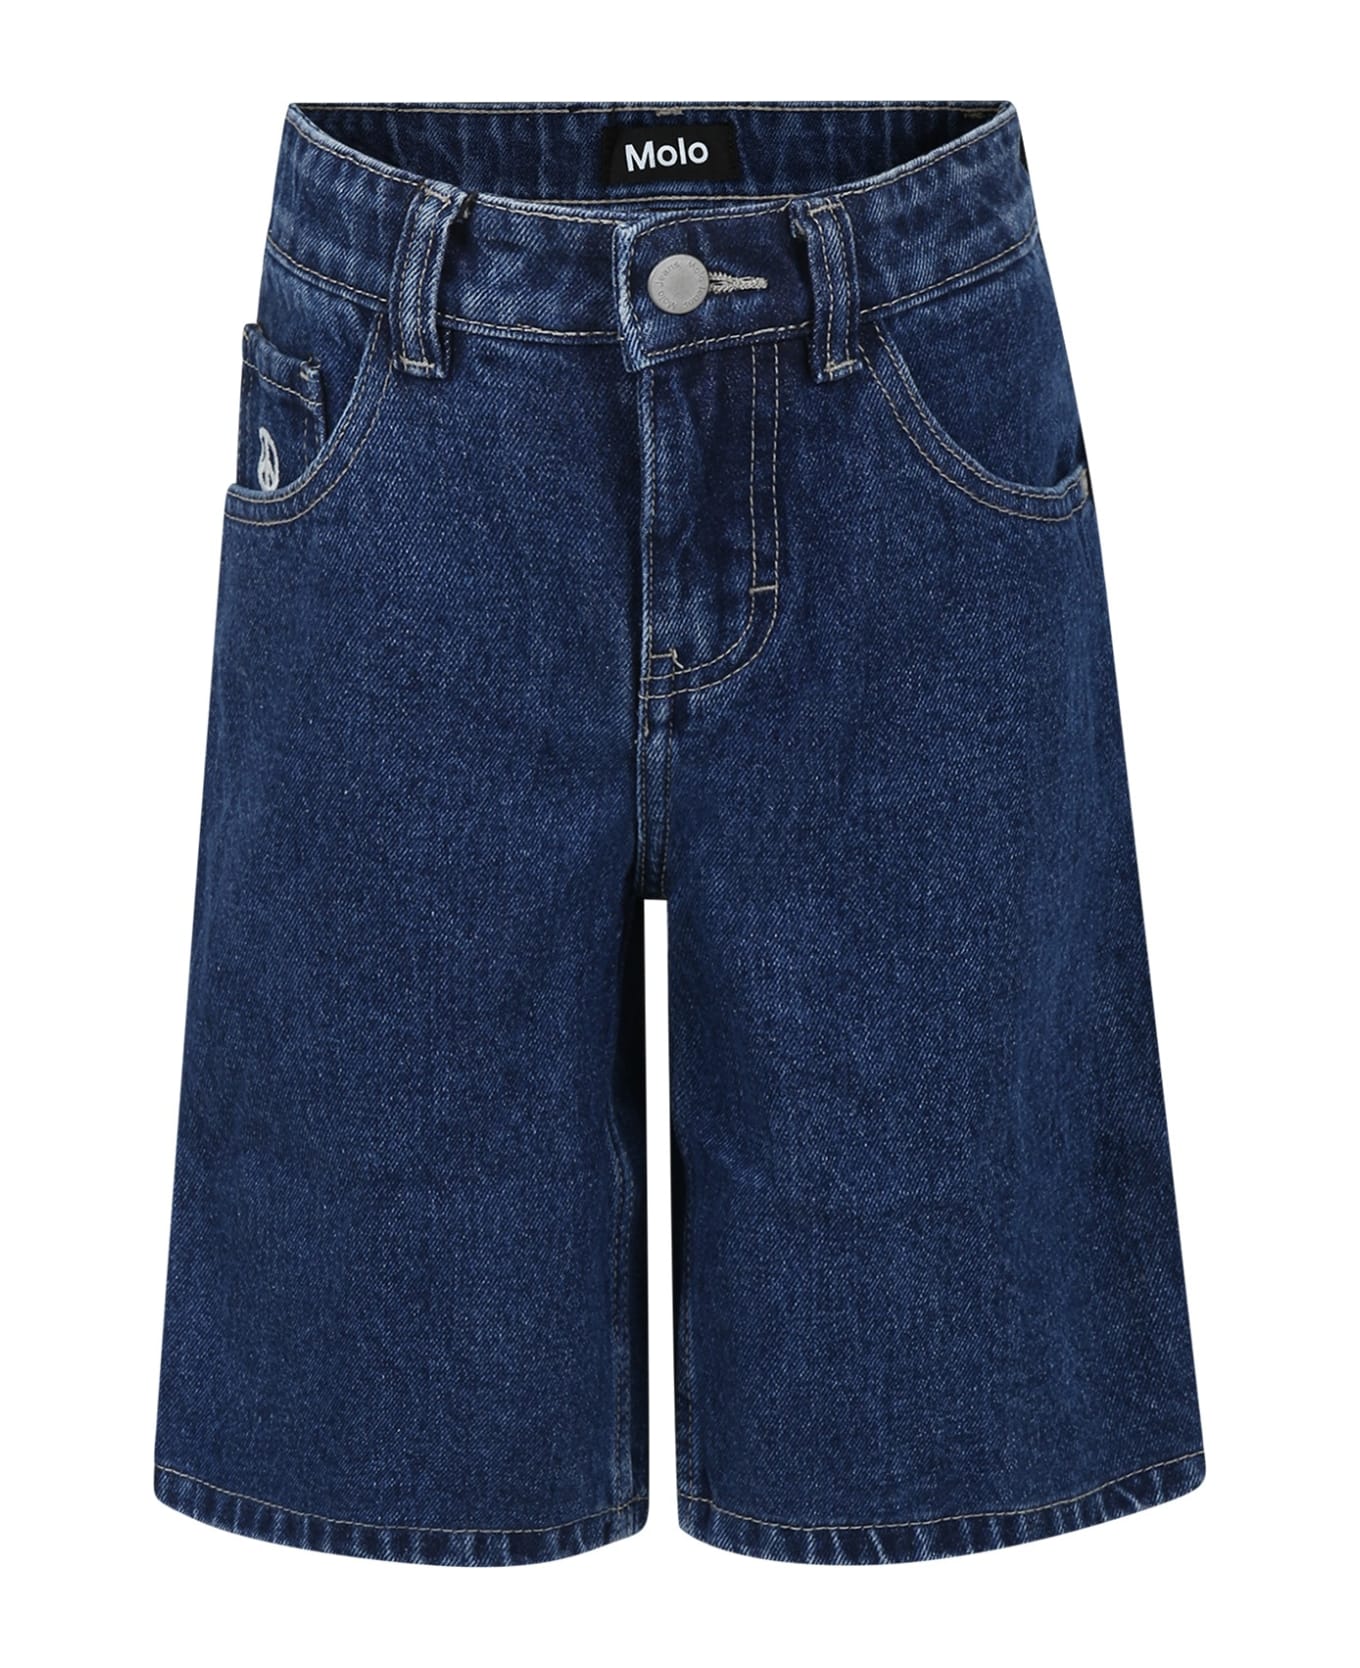 Molo Blue Shorts For Boy With Logo - Denim ボトムス